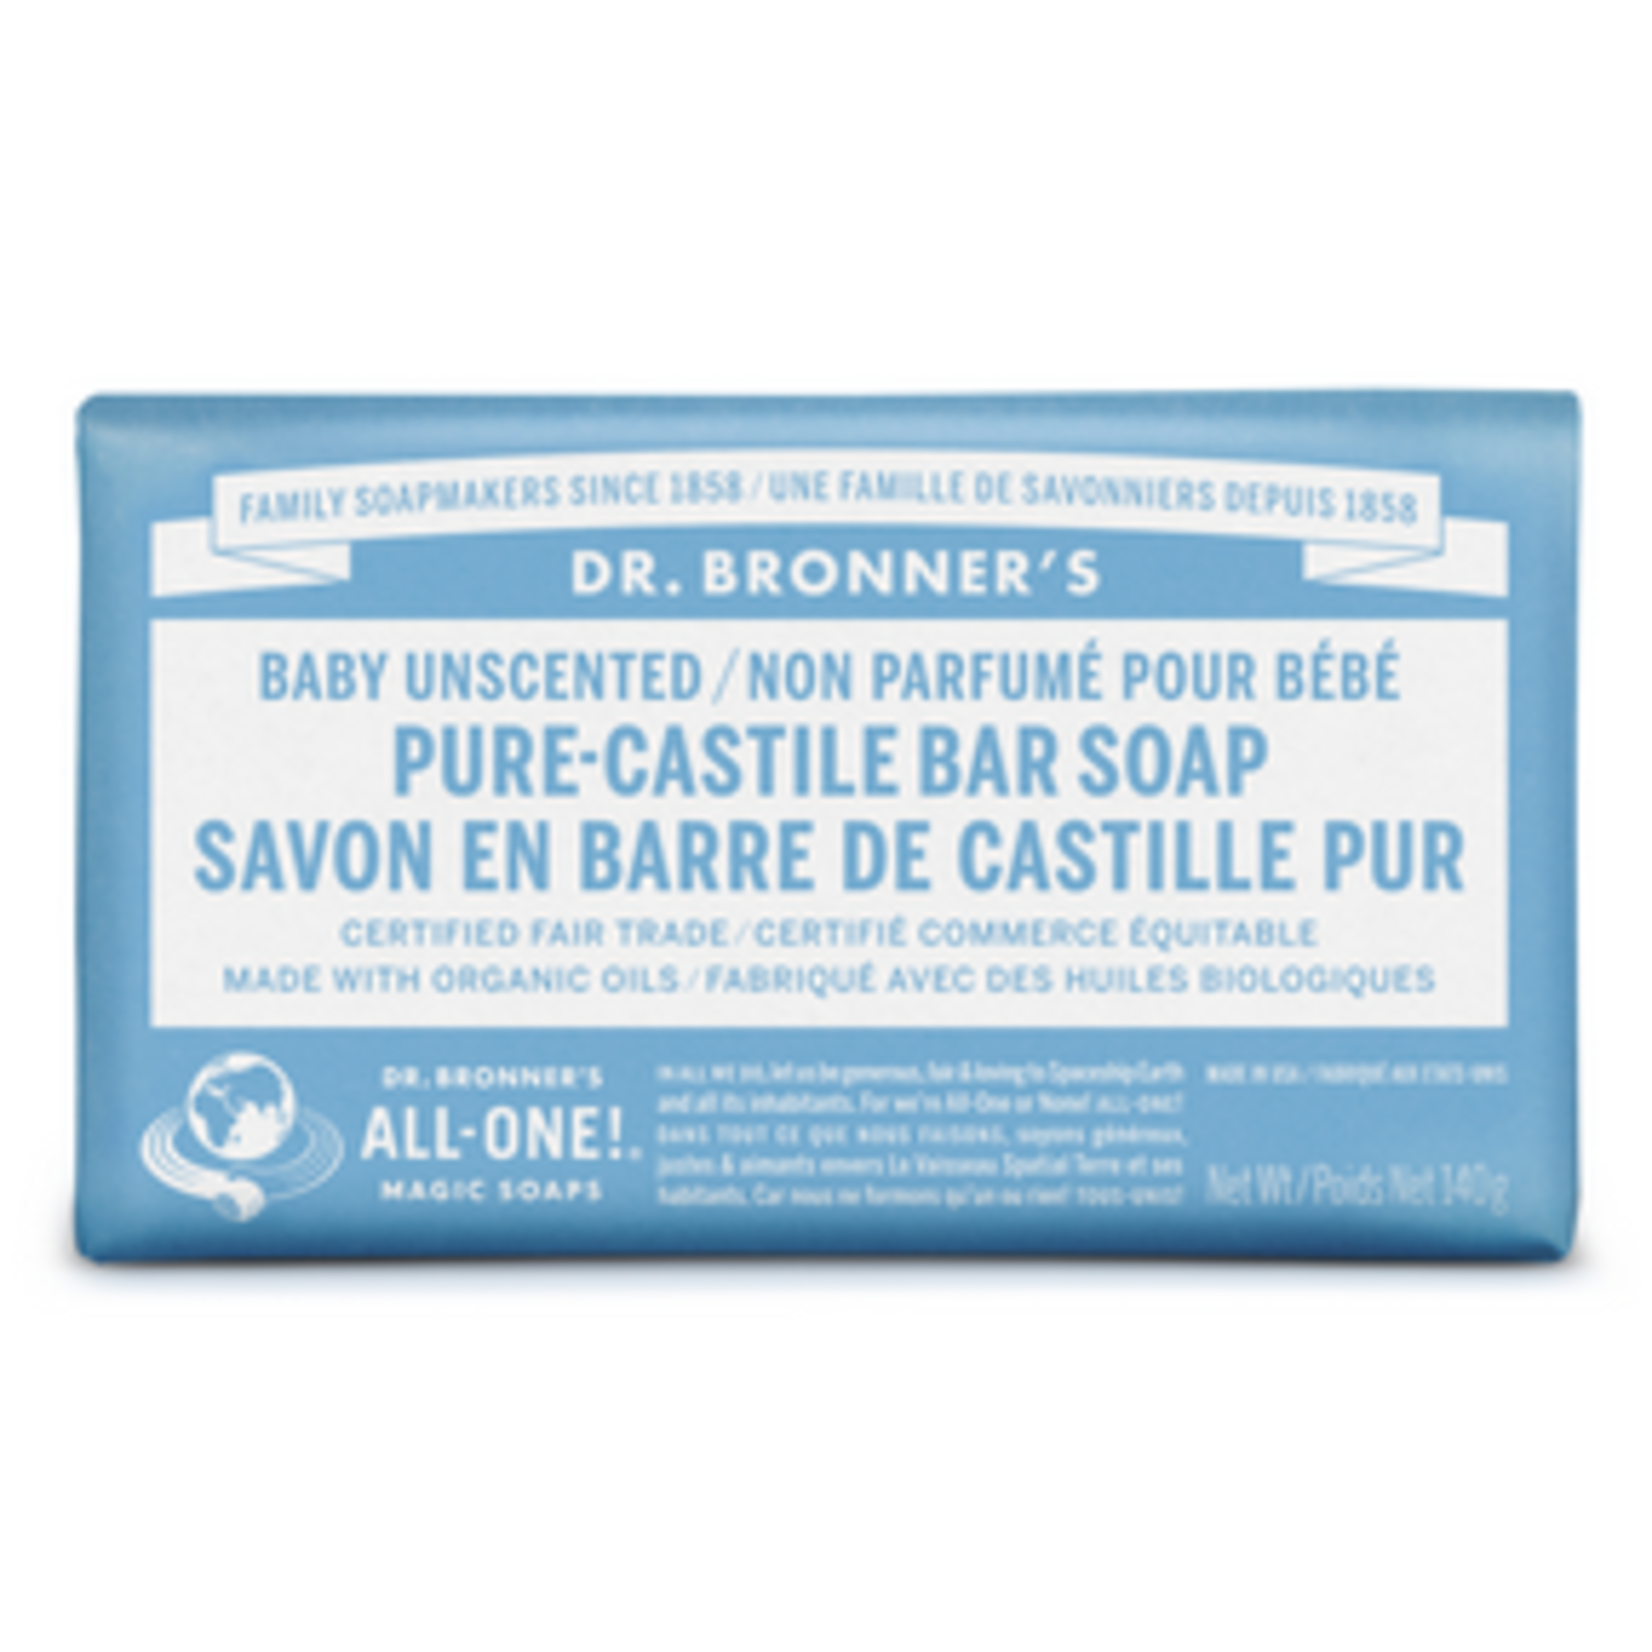 DR.BRONNER DR BRONNER'S BABY UNSCENTED PURE CASTILE BAR SOAP